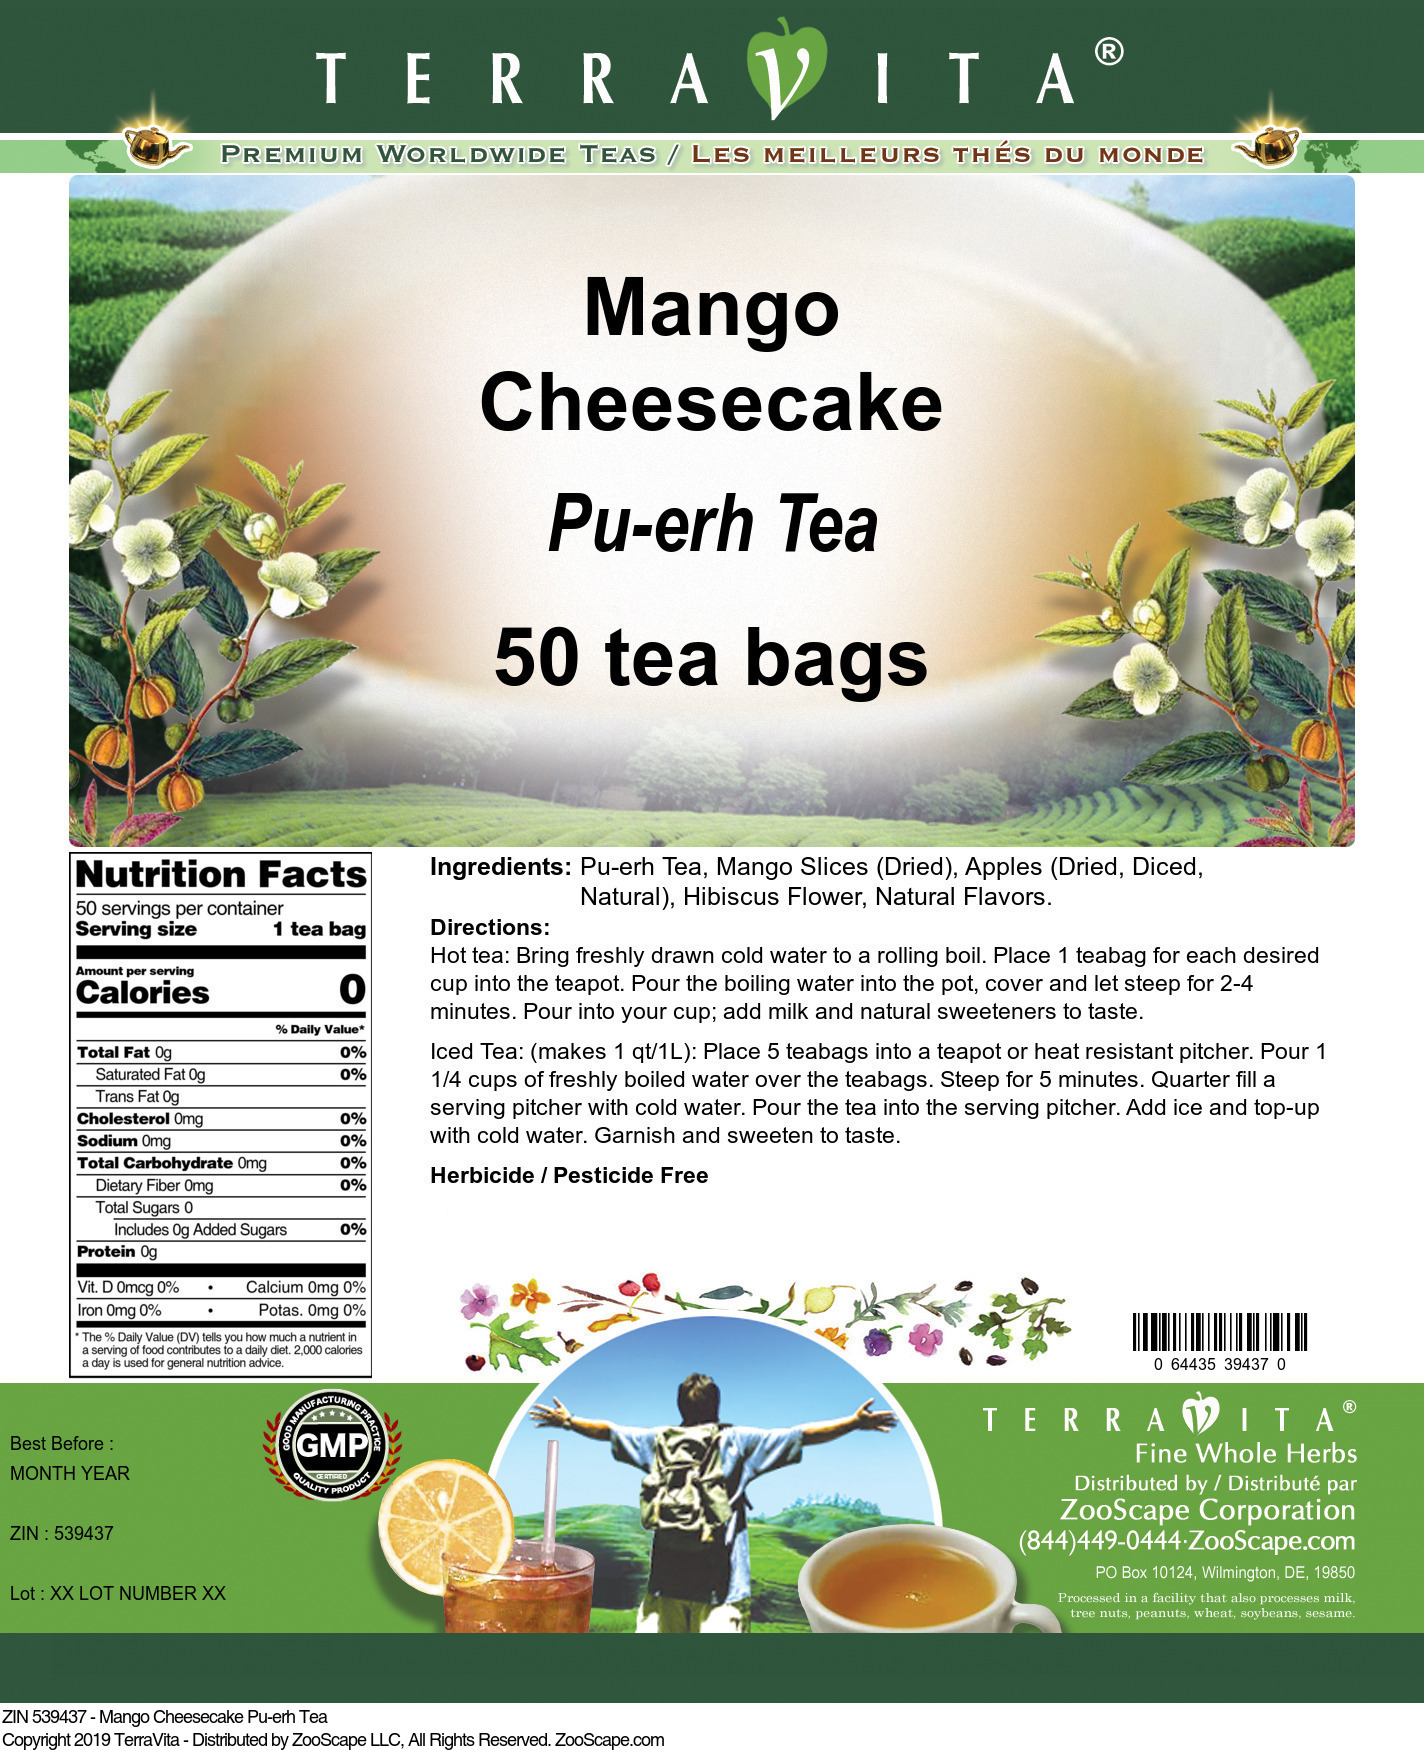 Mango Cheesecake Pu-erh Tea - Label